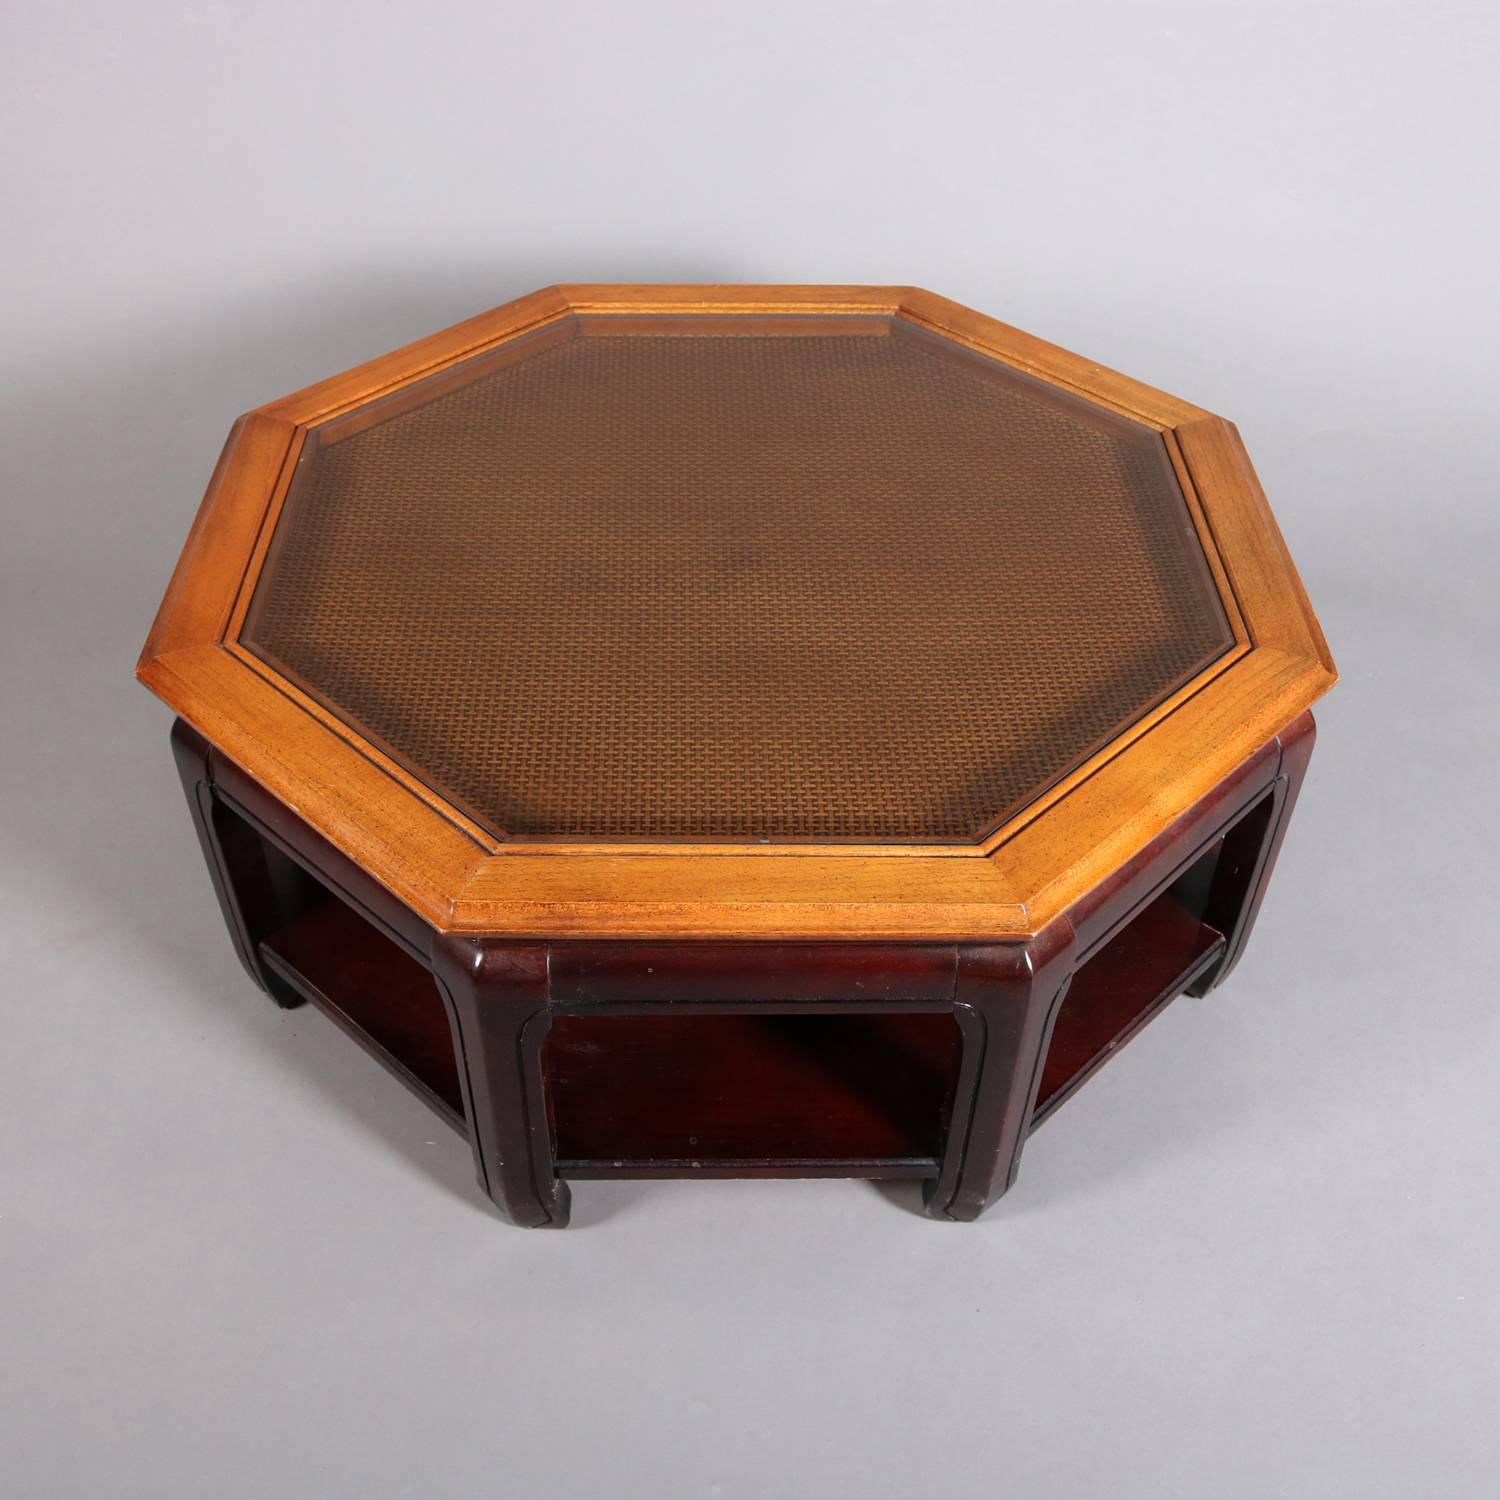 20th Century Chinese Style Hexagonal Mahogany, Walnut and Cane Top Coffee Table, circa 1920